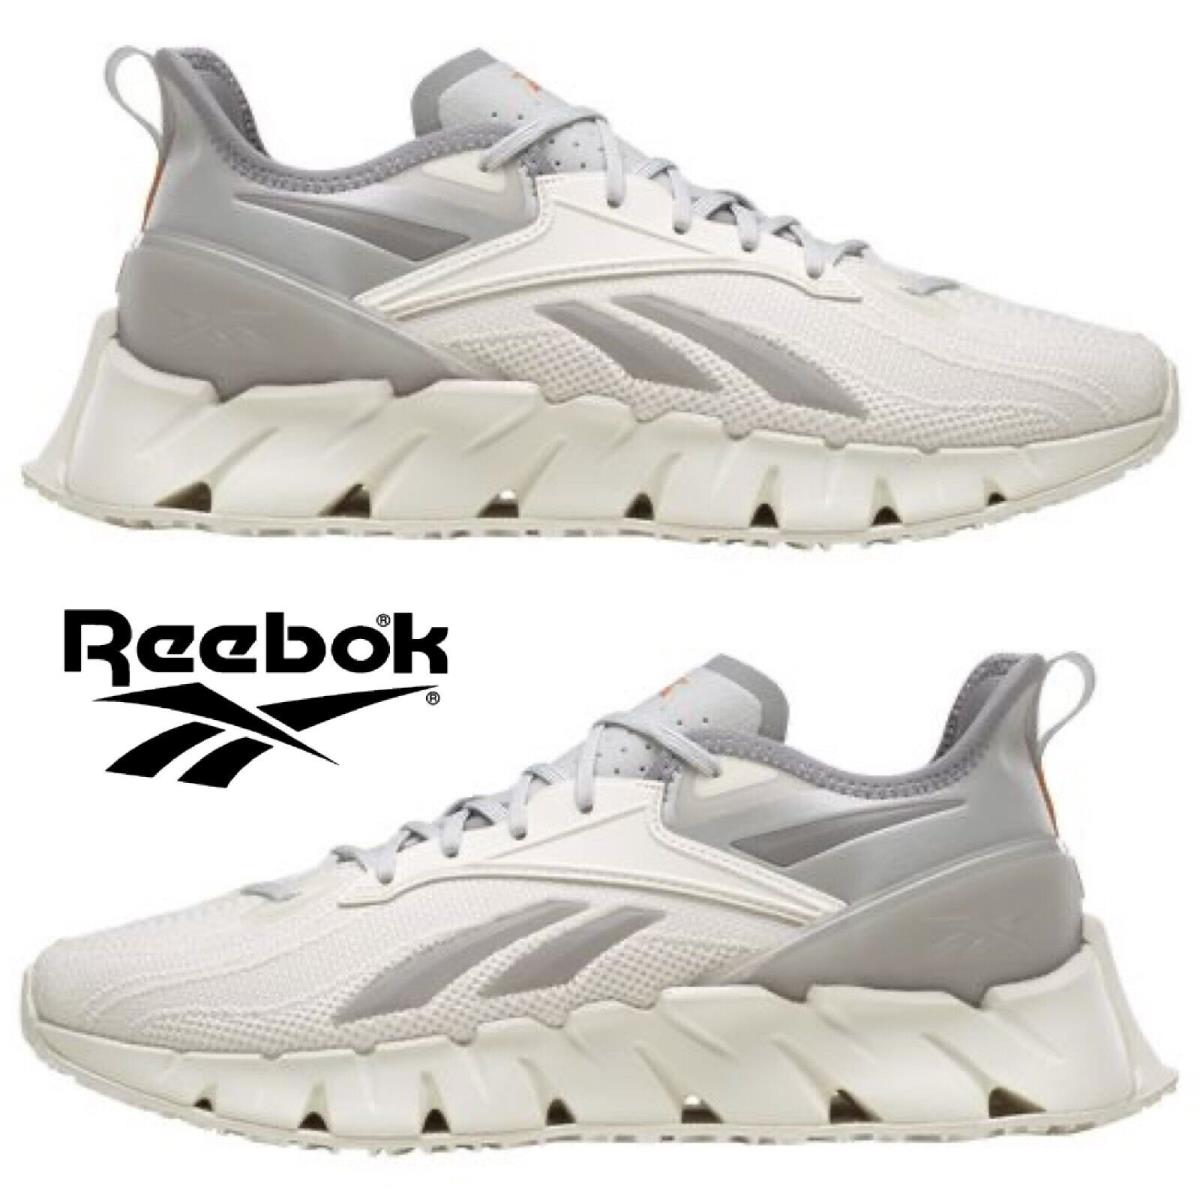 Reebok Zig Kinetica 3 Men`s Sneakers Hiking Walking Running Shoes Casual Sport